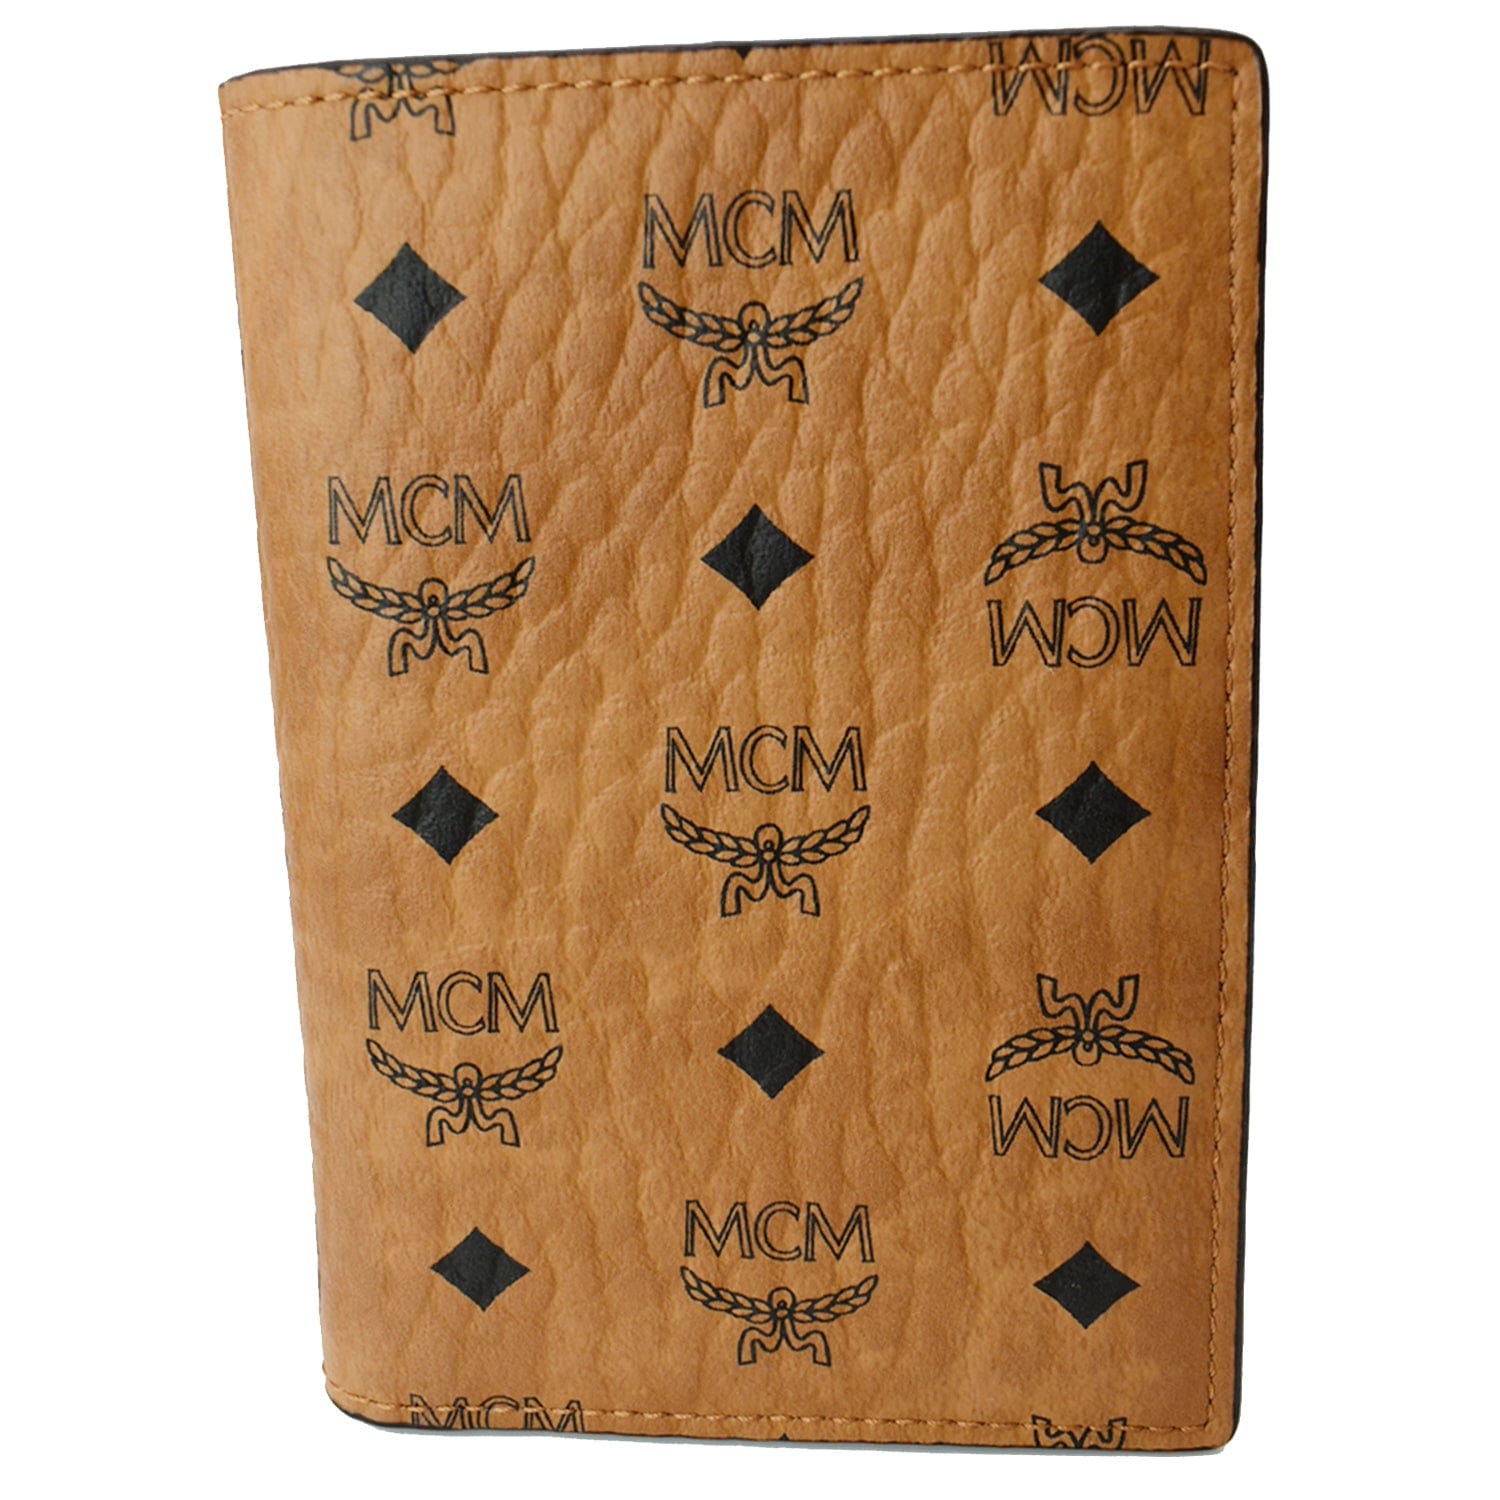 MCM Original Visetos Trifold Wallet